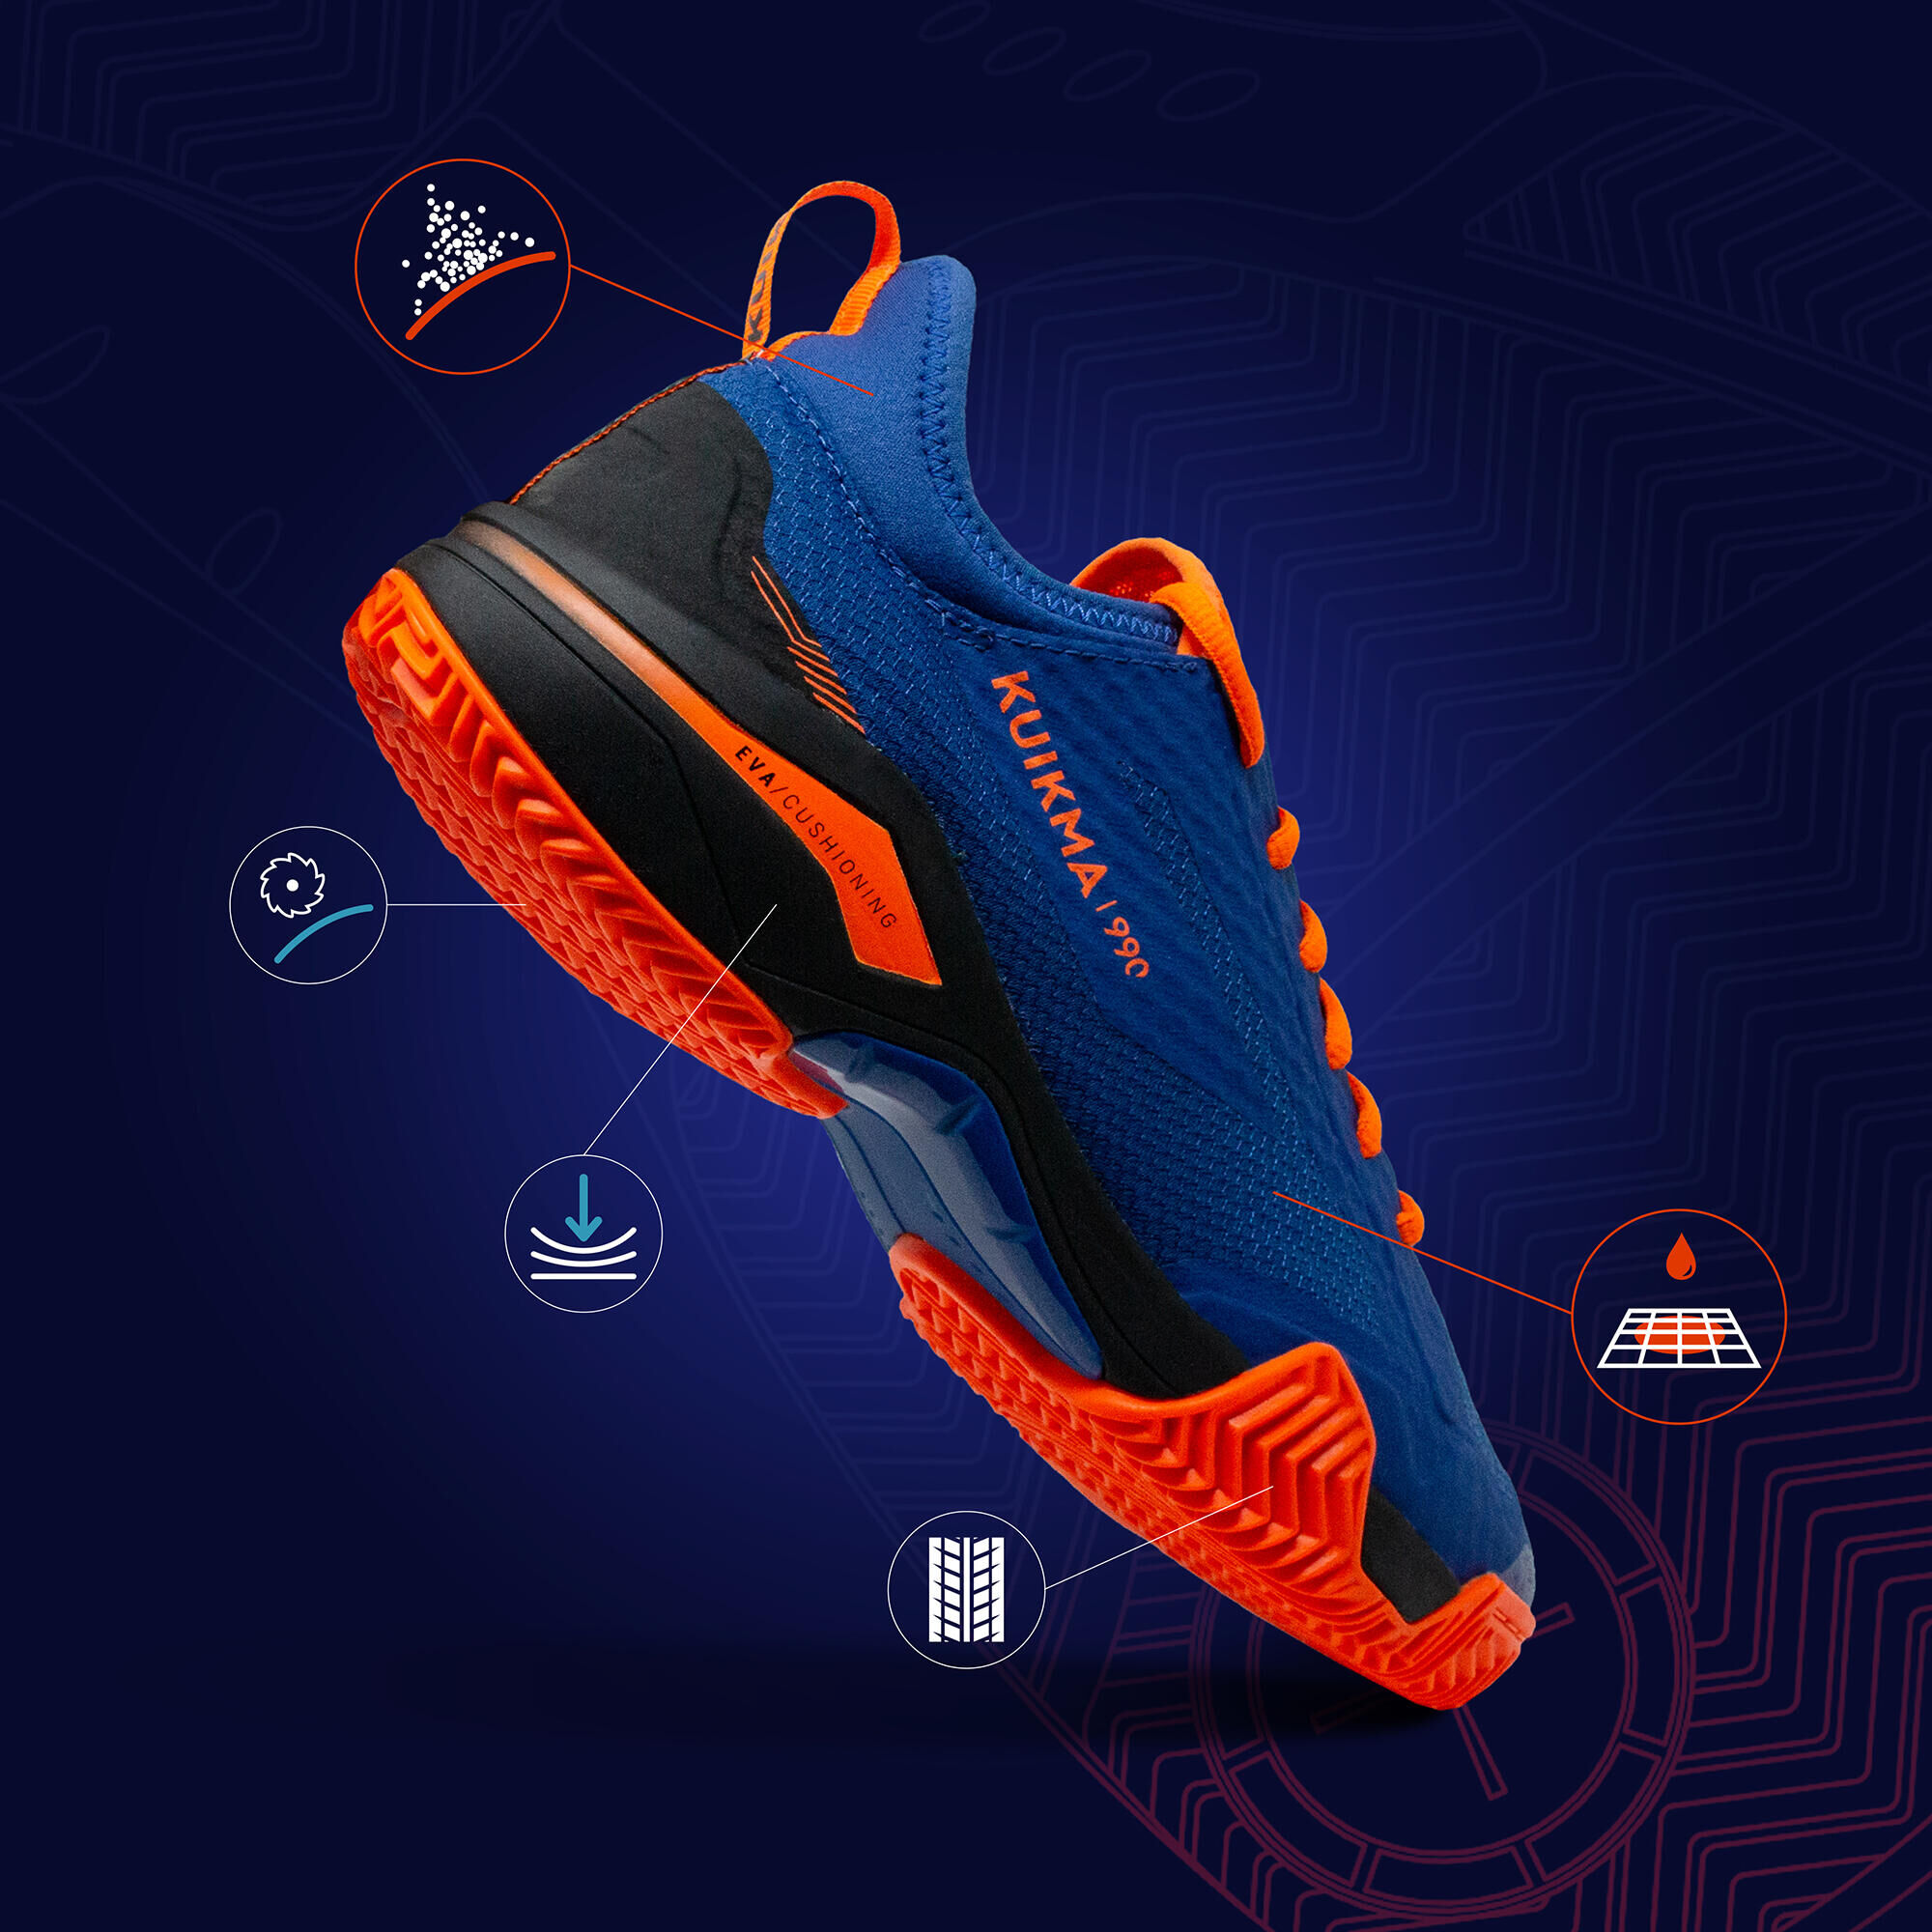 KUIKMA Men's Padel Shoes PS 990 Dynamic - Blue/Orange